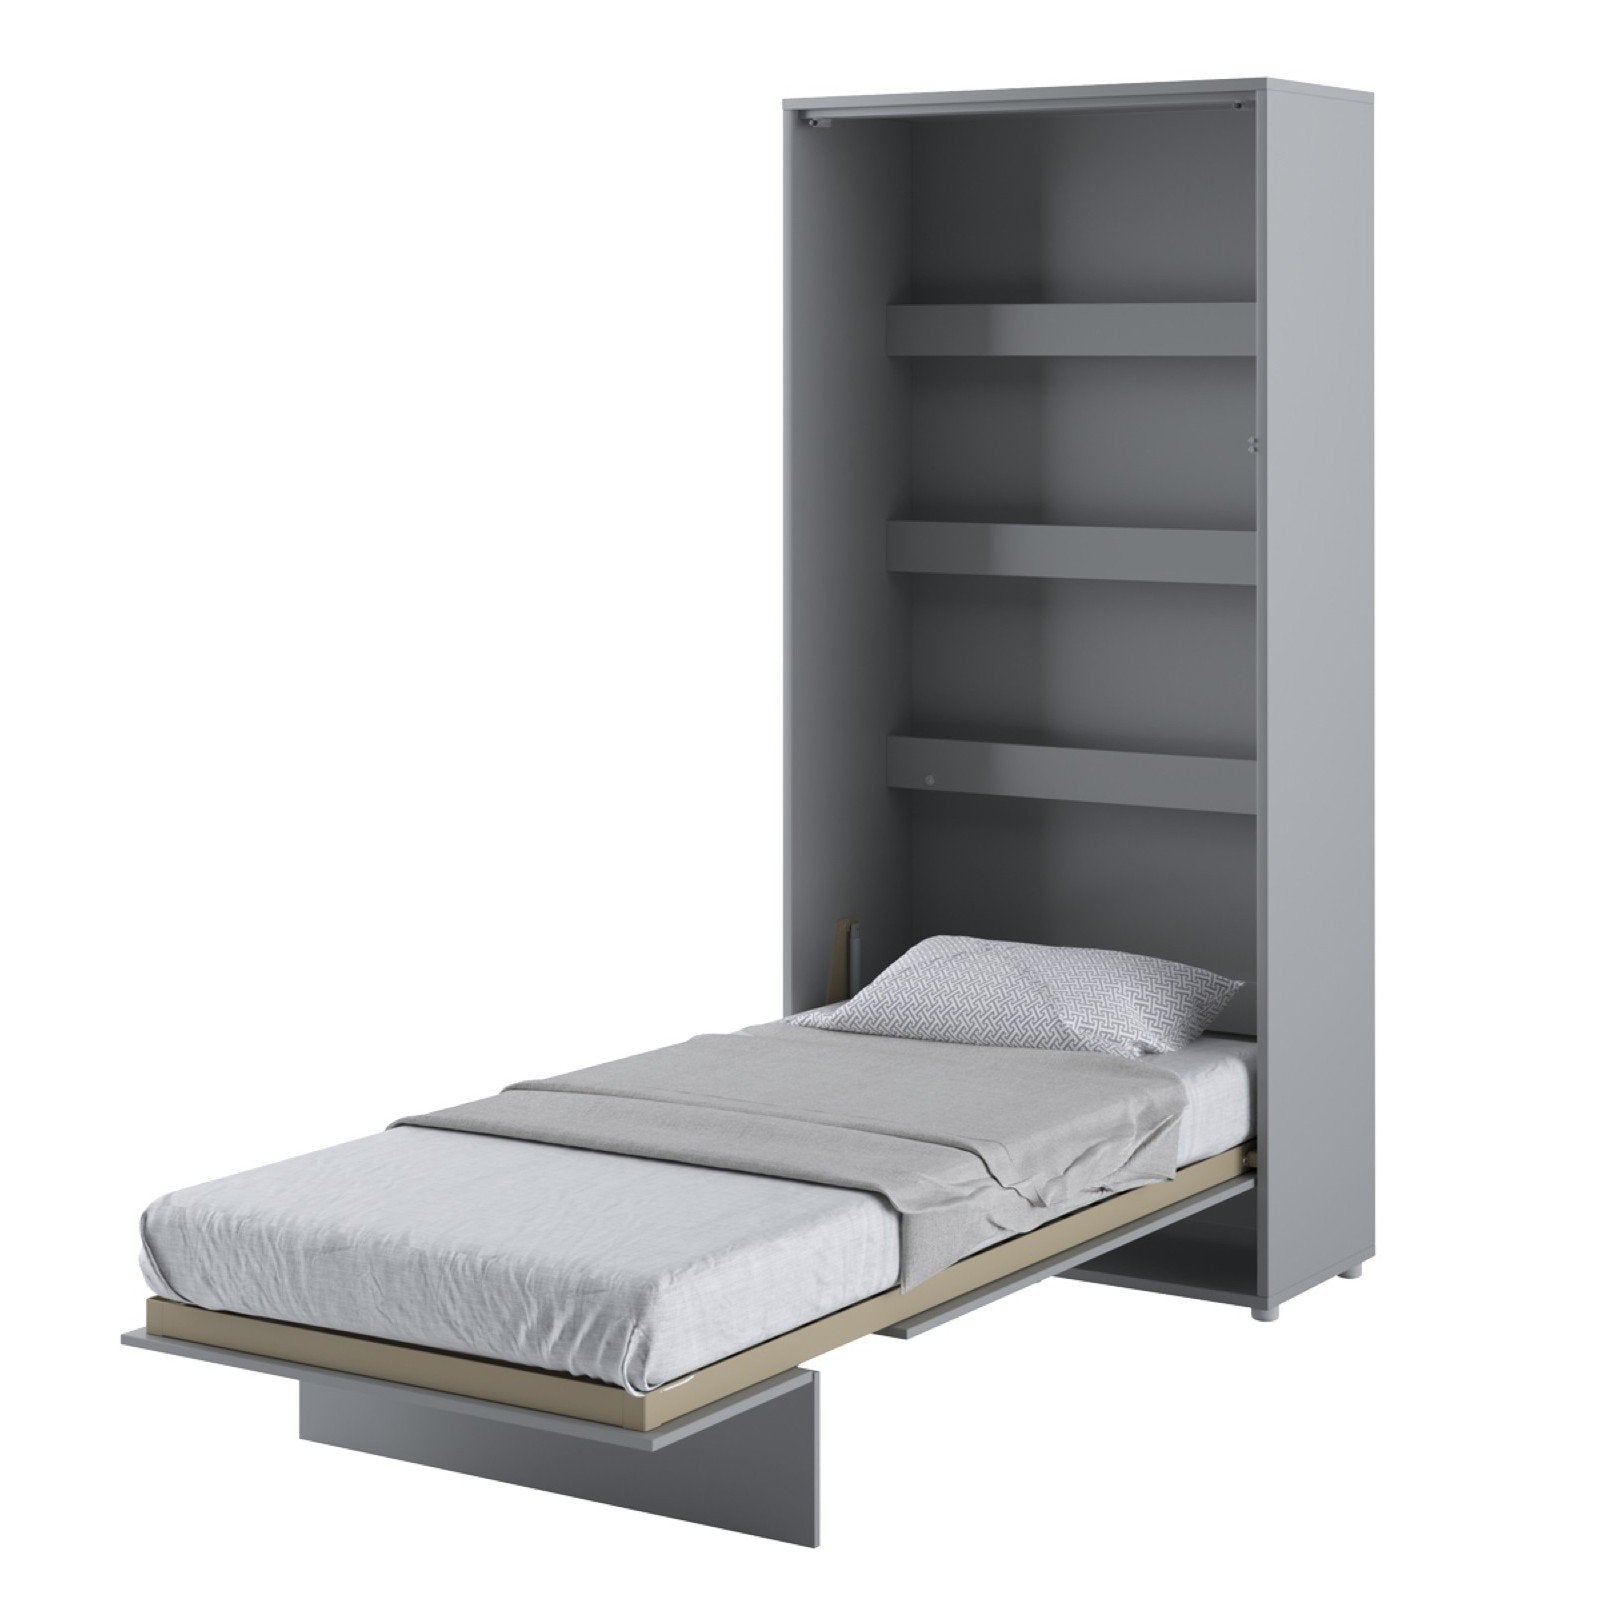 View BC03 Vertical Wall Bed Concept 90cm Murphy Bed Grey Matt 90 x 200cm information